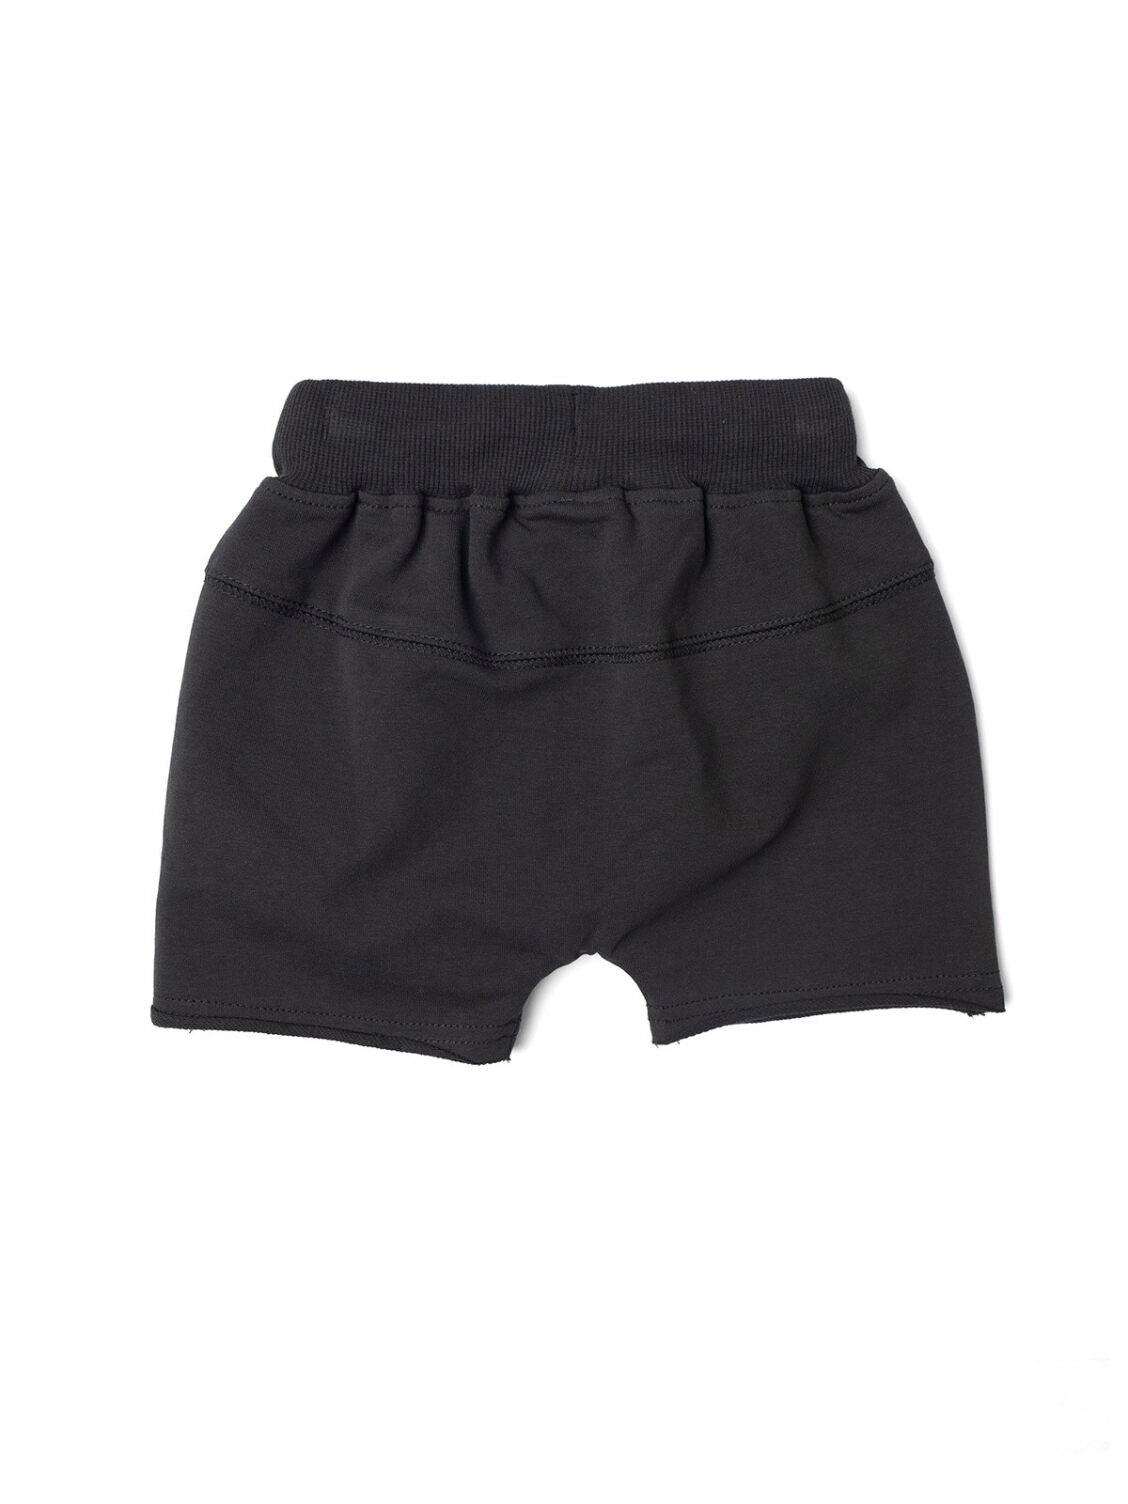 Raw Edge Harem Shorts - Charcoal